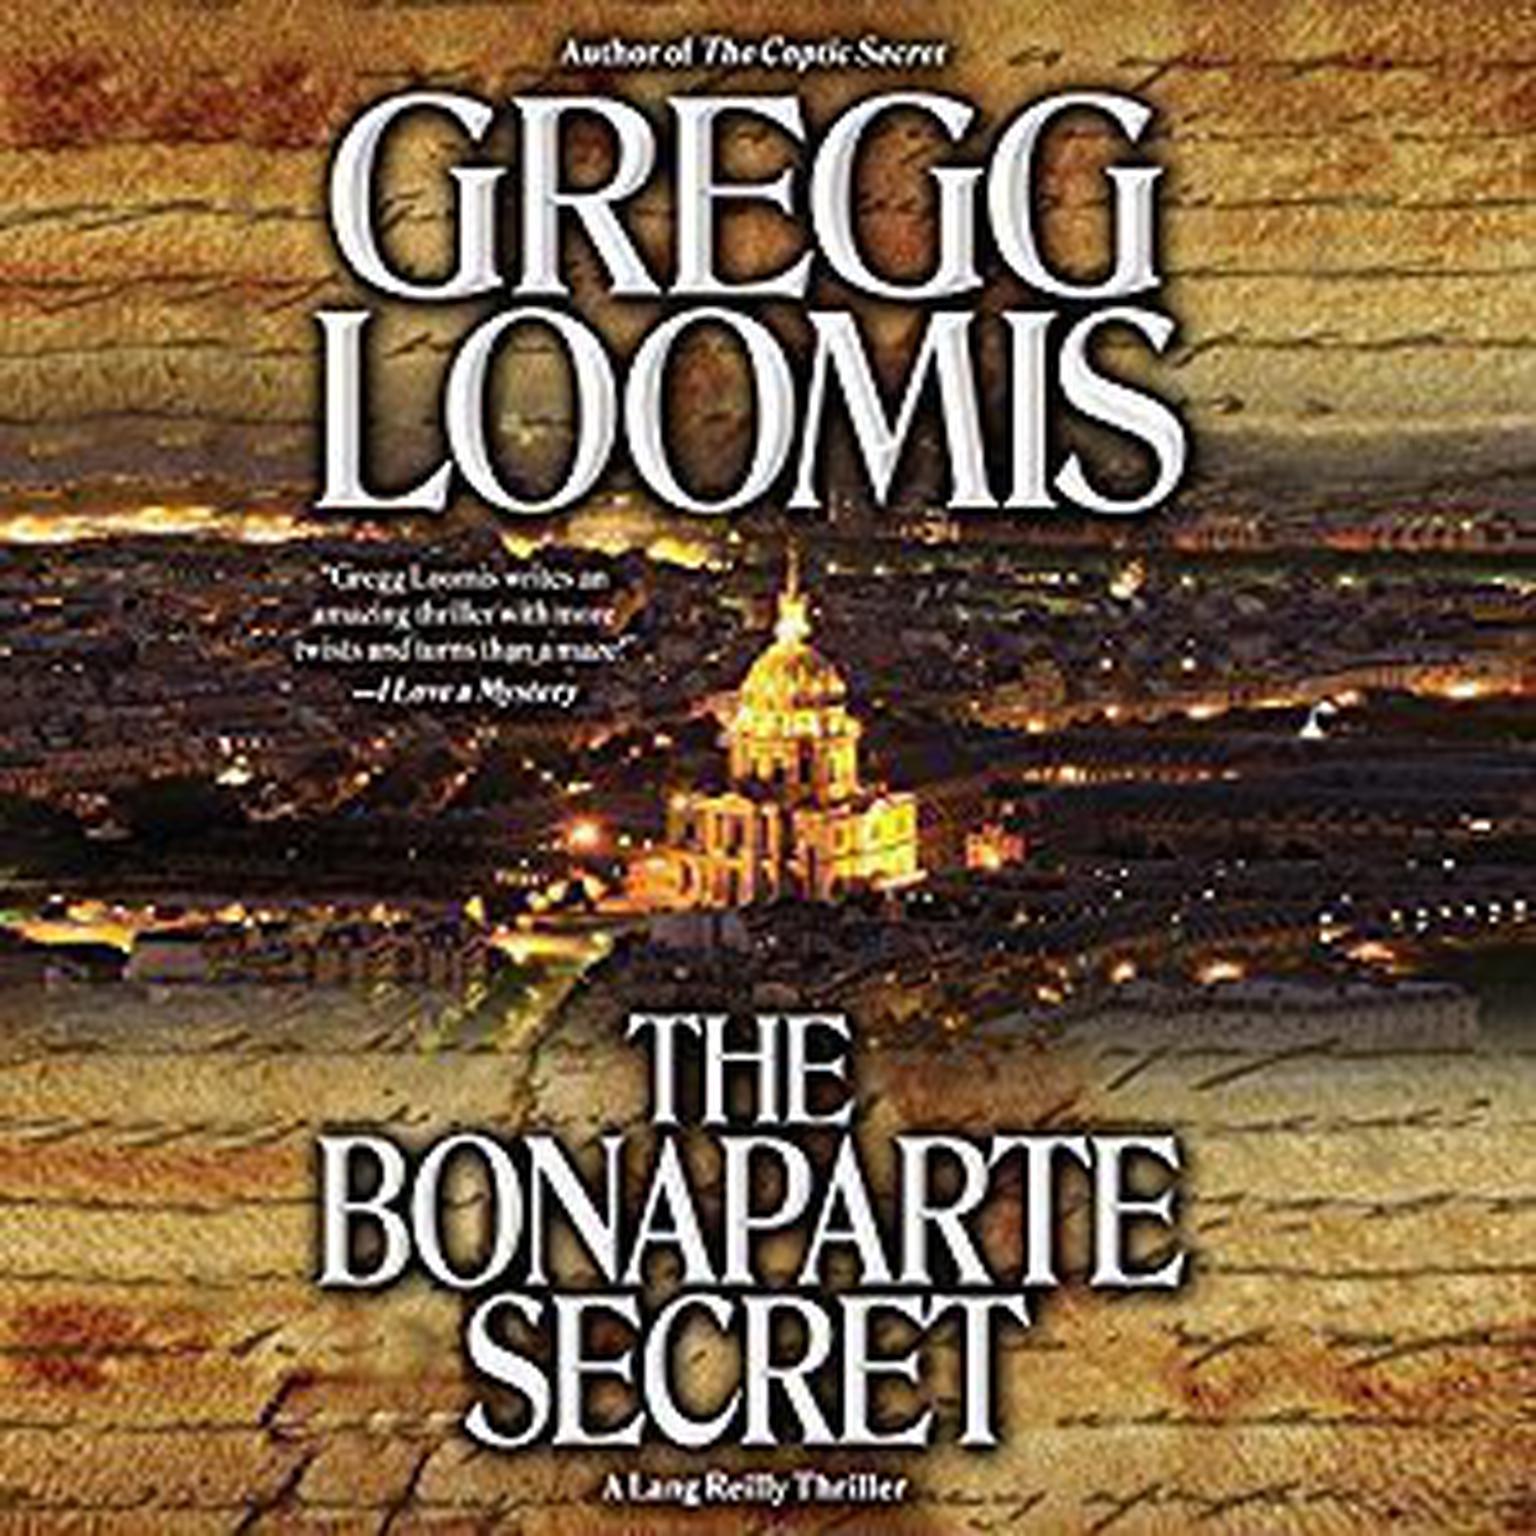 The Bonaparte Secret Audiobook, by Gregg Loomis